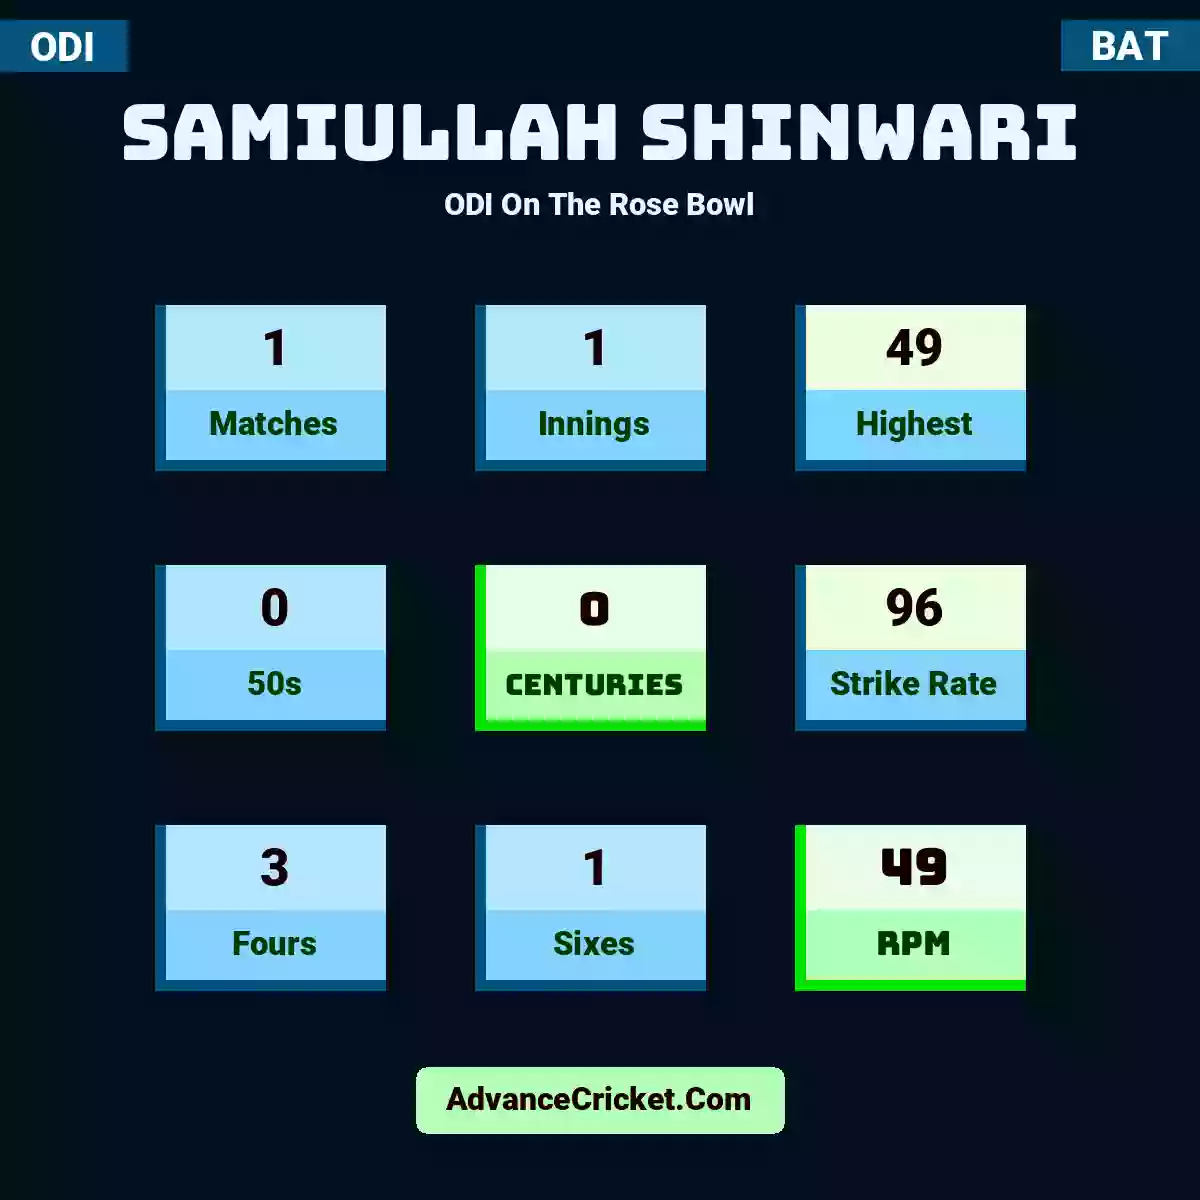 Samiullah Shinwari ODI  On The Rose Bowl, Samiullah Shinwari played 1 matches, scored 49 runs as highest, 0 half-centuries, and 0 centuries, with a strike rate of 96. S.Shinwari hit 3 fours and 1 sixes, with an RPM of 49.